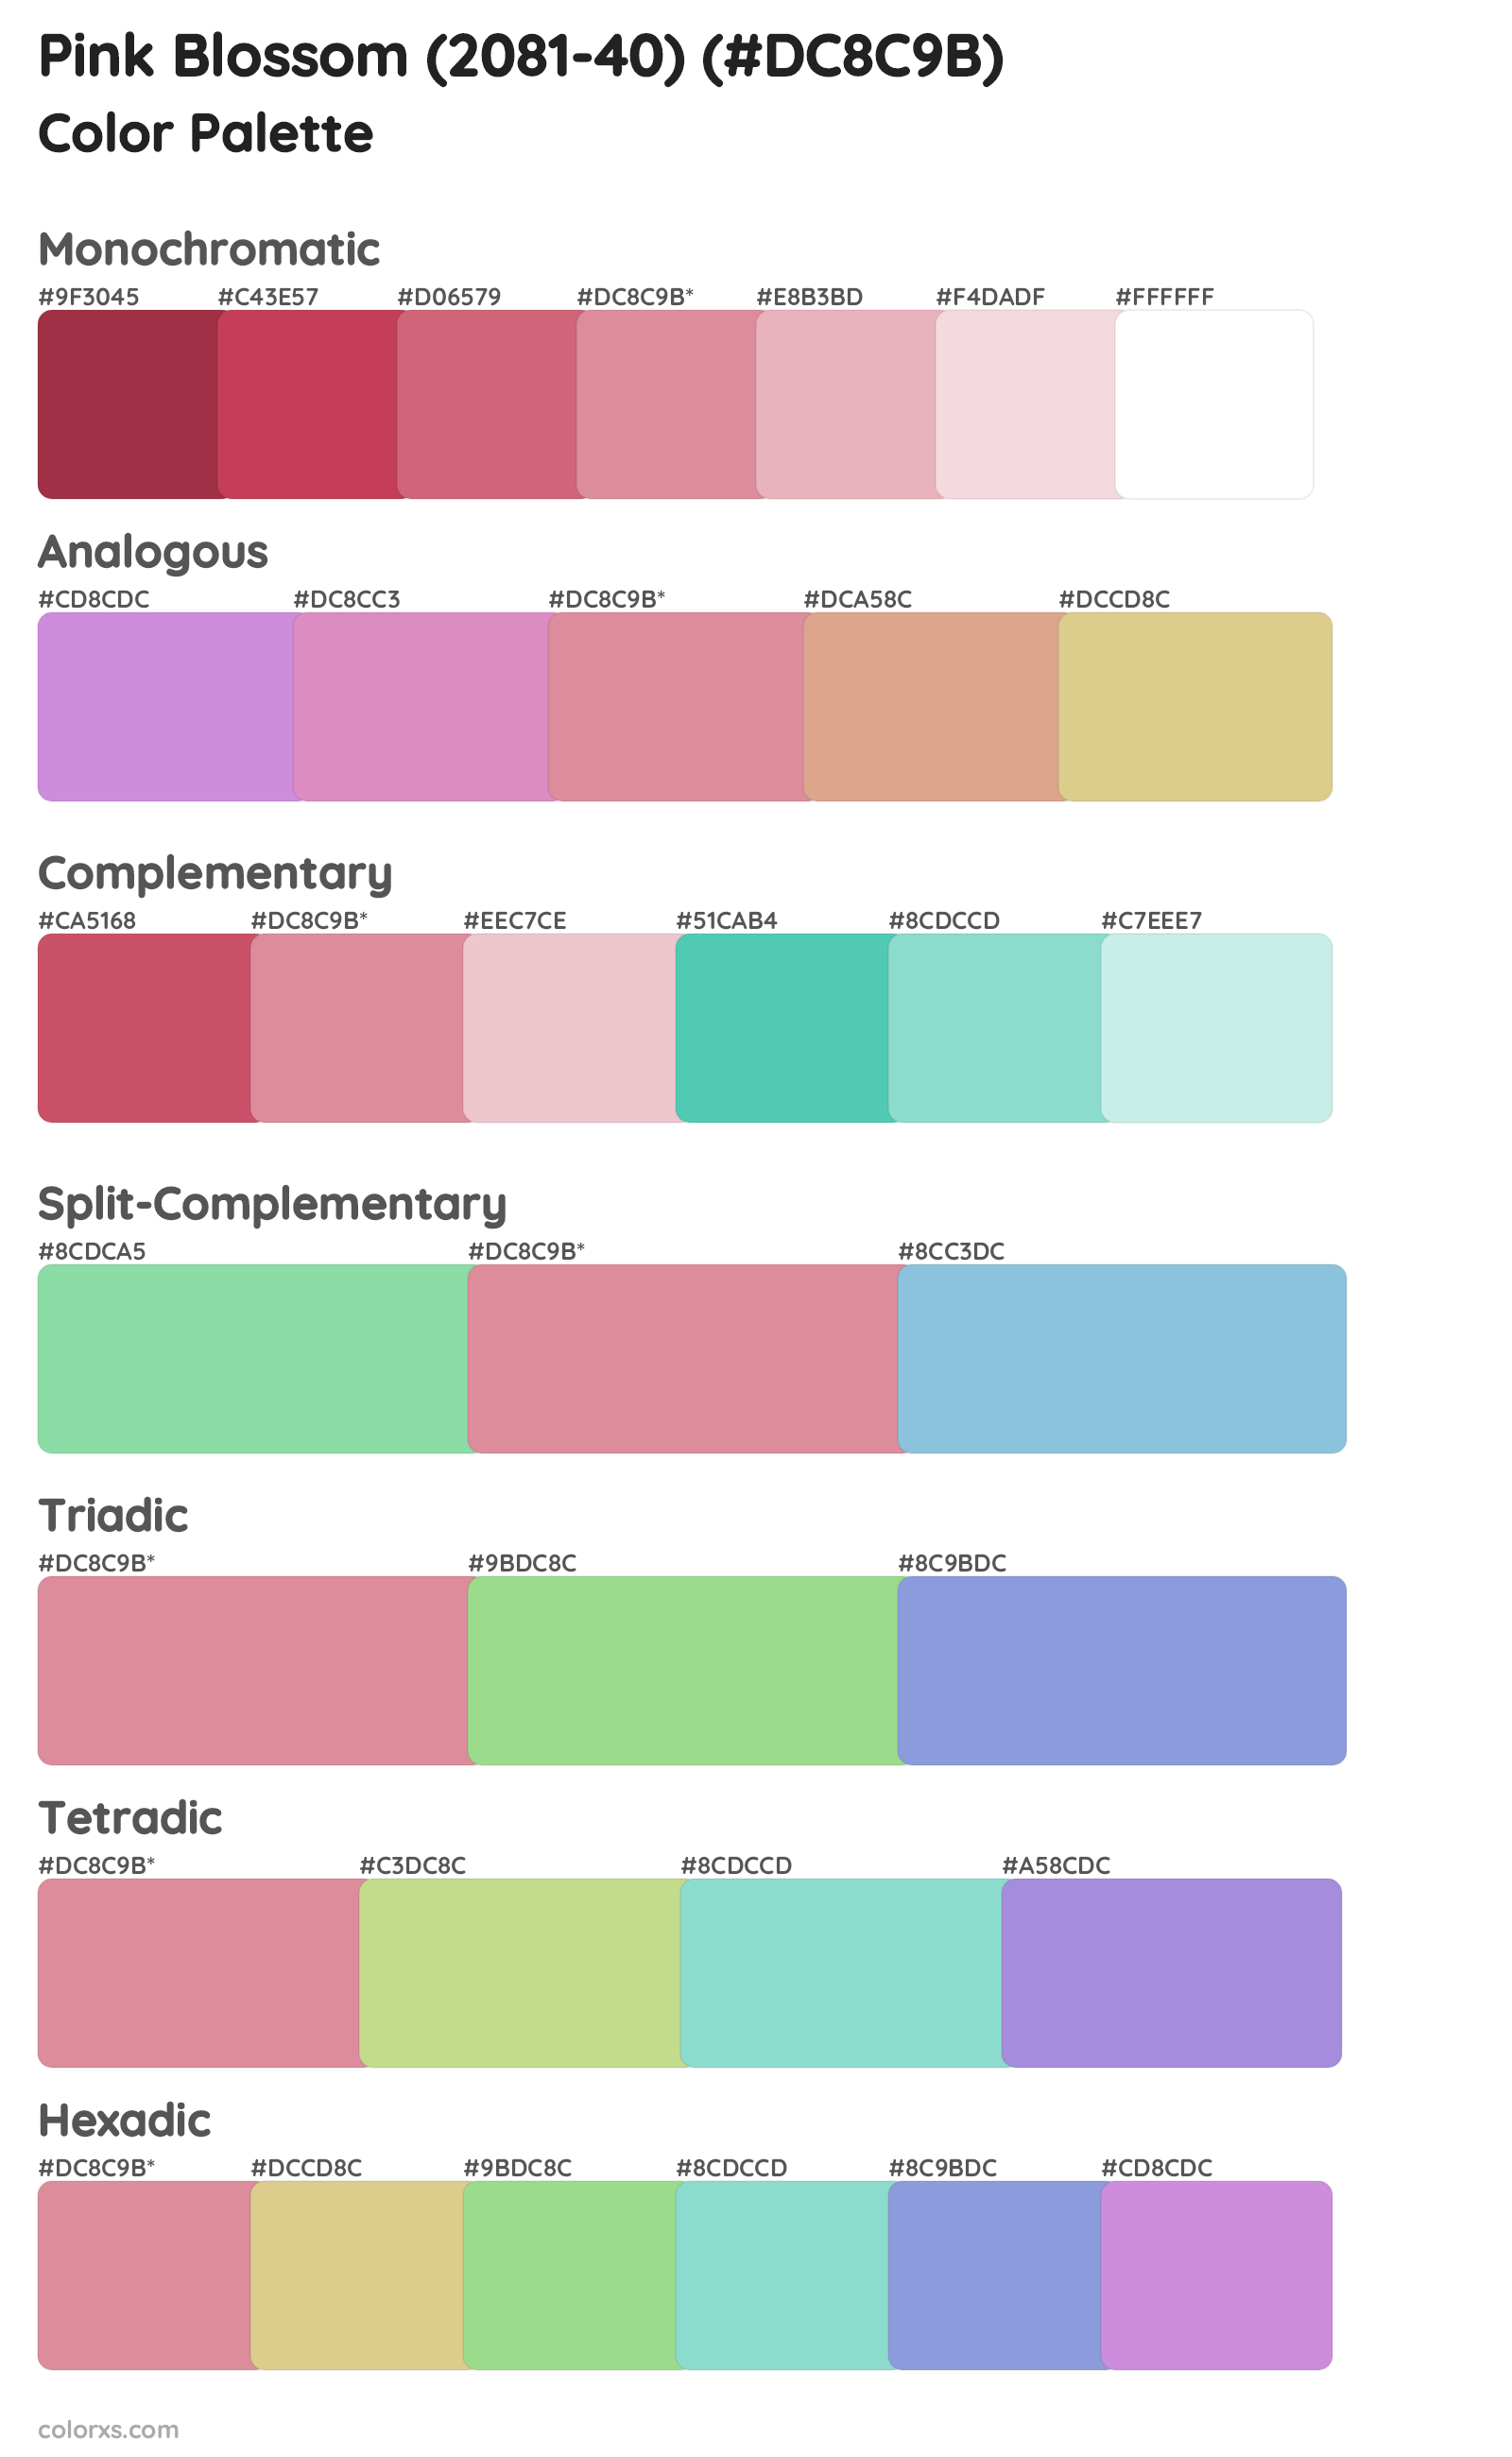 Pink Blossom (2081-40) Color Scheme Palettes